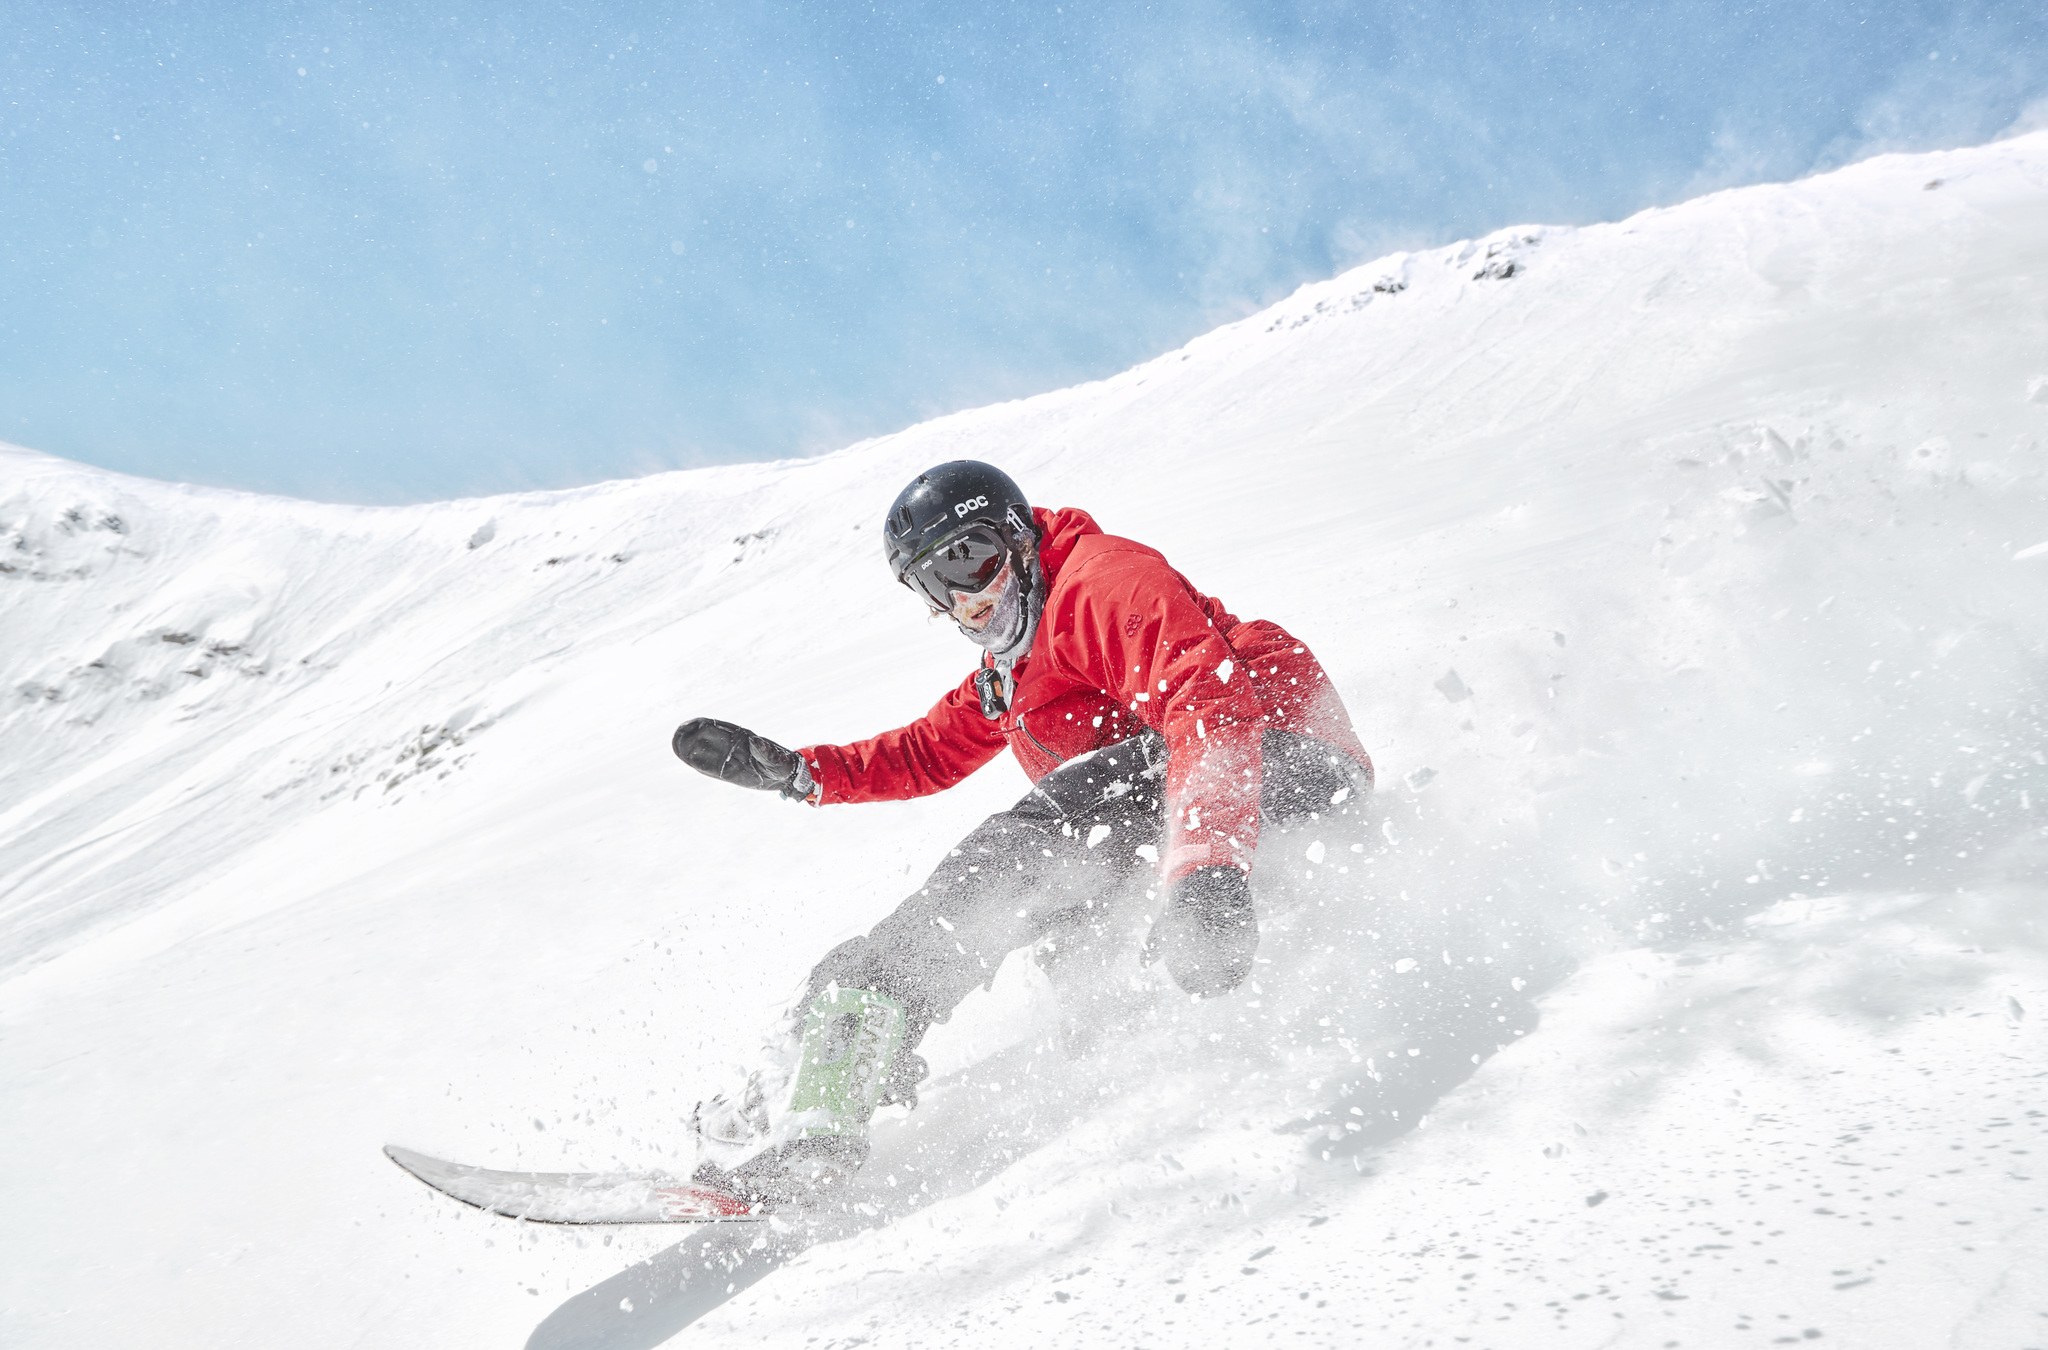 A snowboarding riding powder at Breckenridge Ski Resort. Take a snowboard lesson to improve your skills!